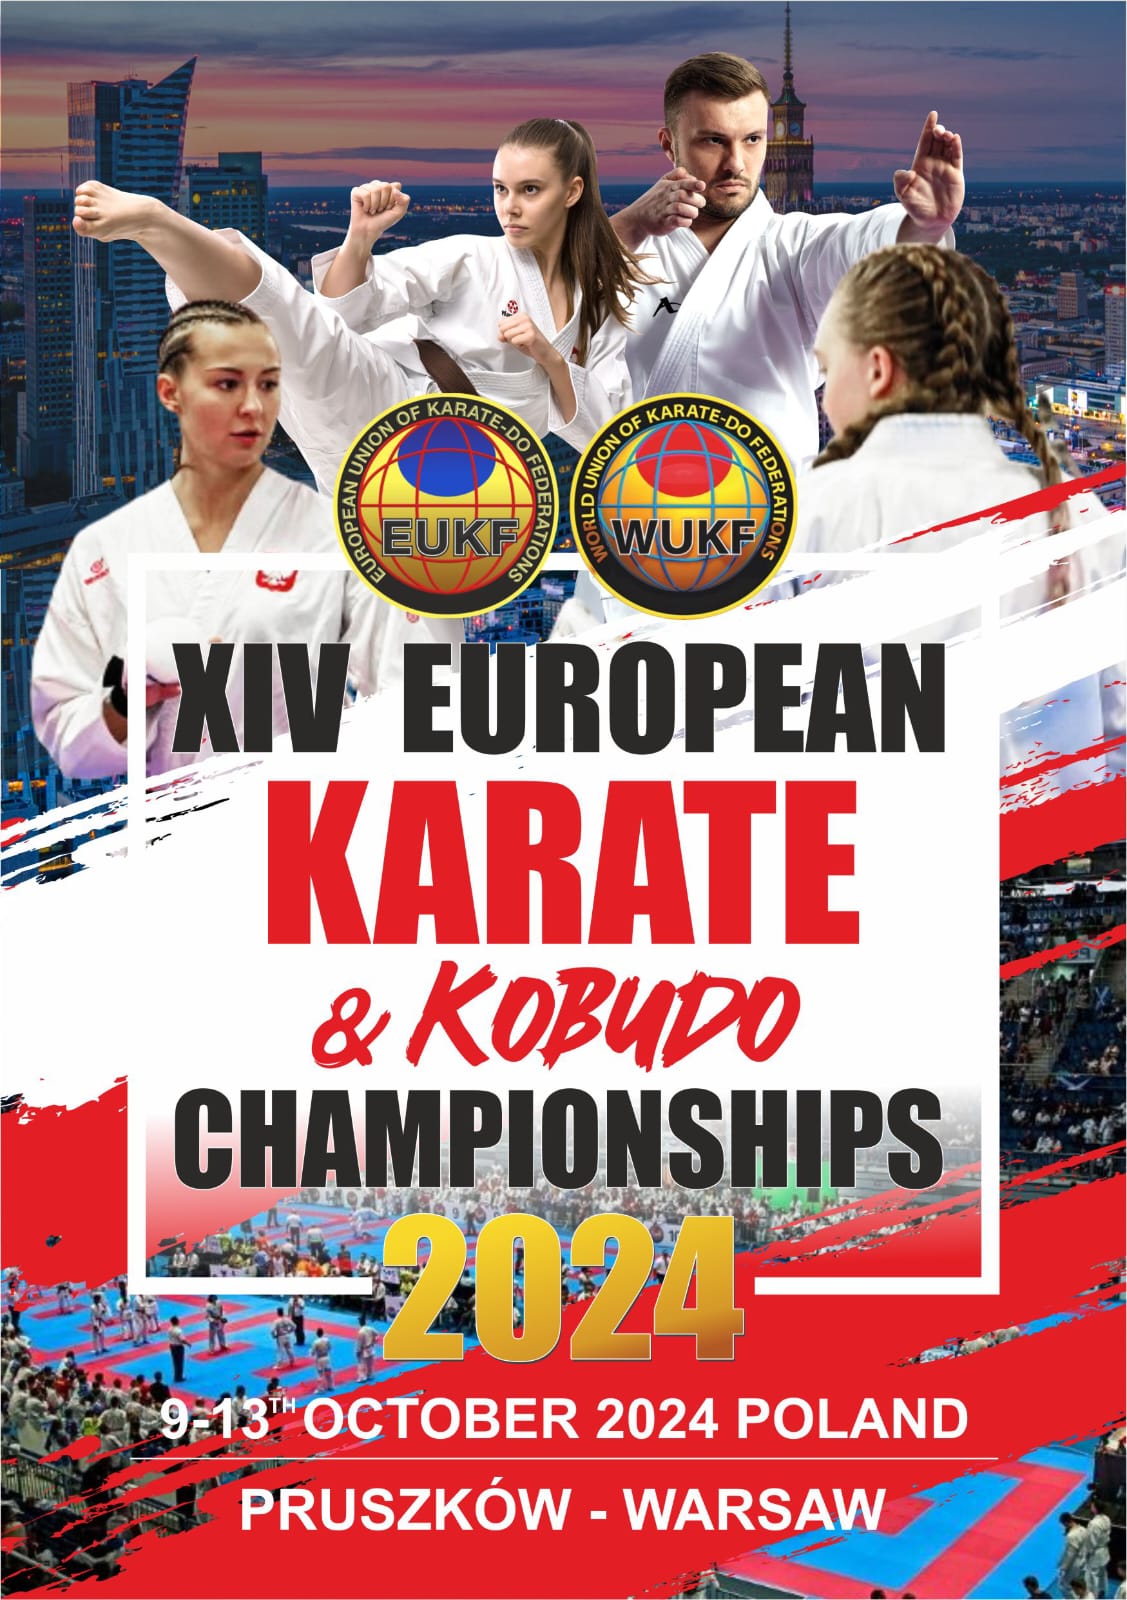 13th WUKF European Karate Championships 2024 World Union of Karate